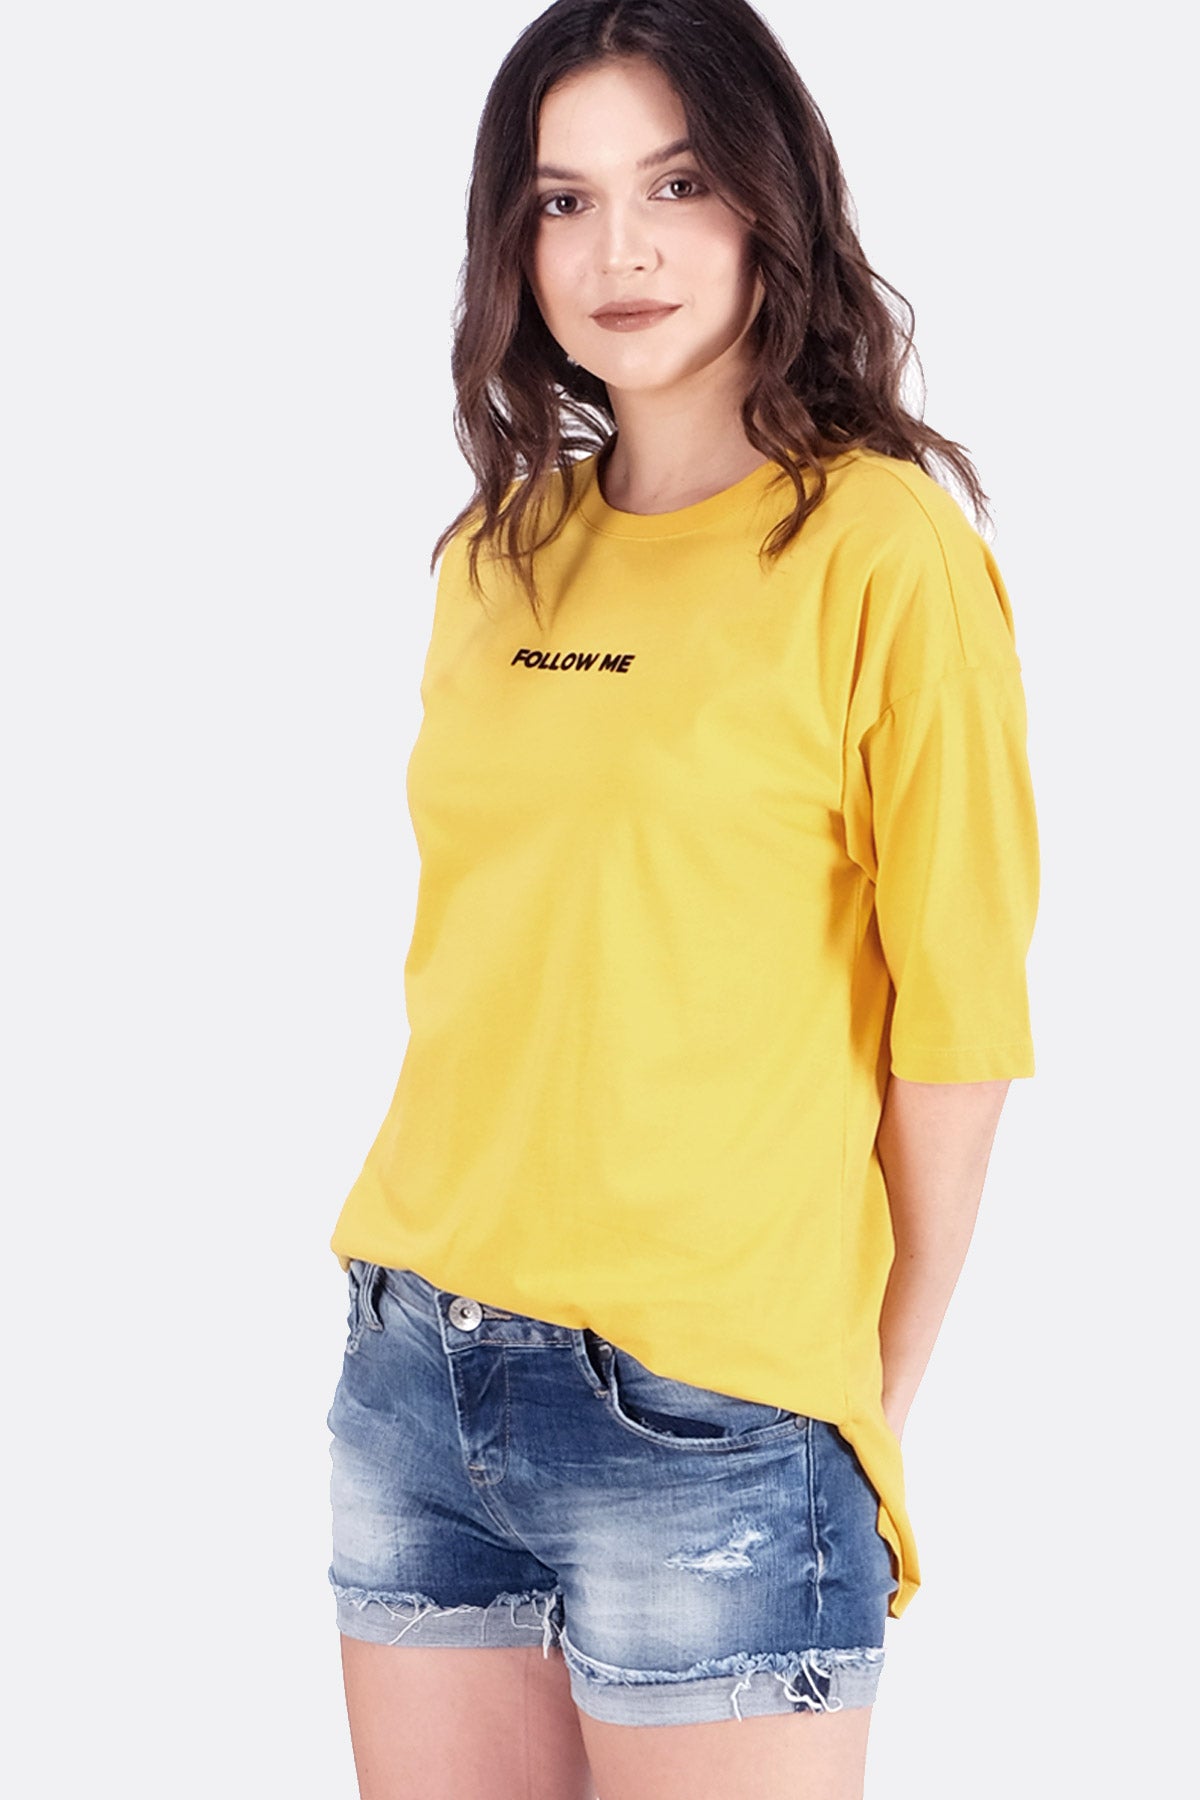 T-Shirt Lengan Pendek Orion Yellow